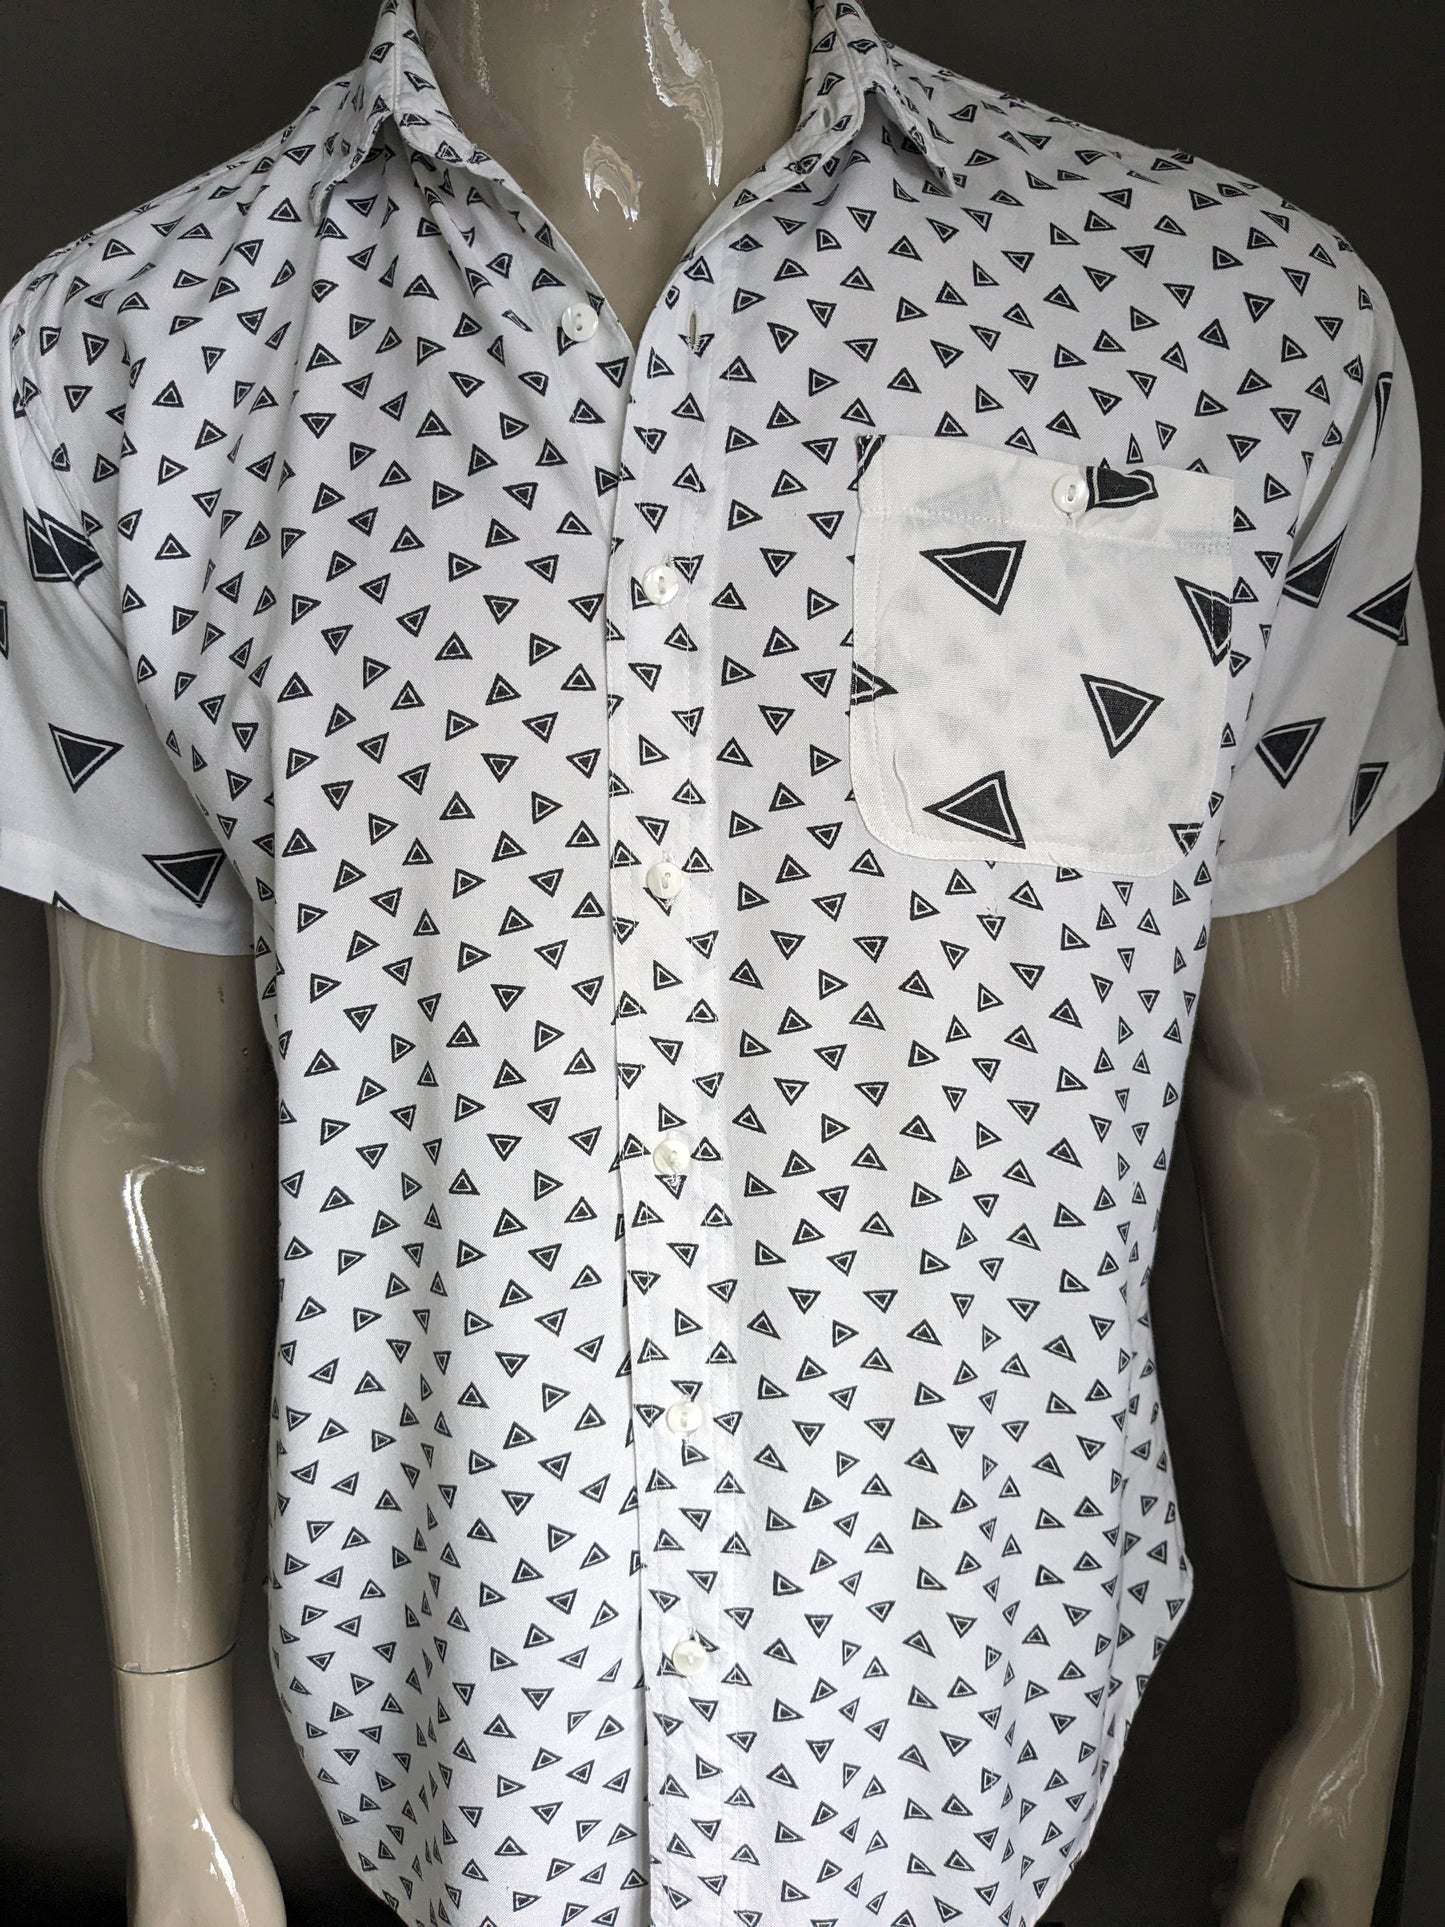 Vintage shirt short sleeve. Black and white print. Size M.